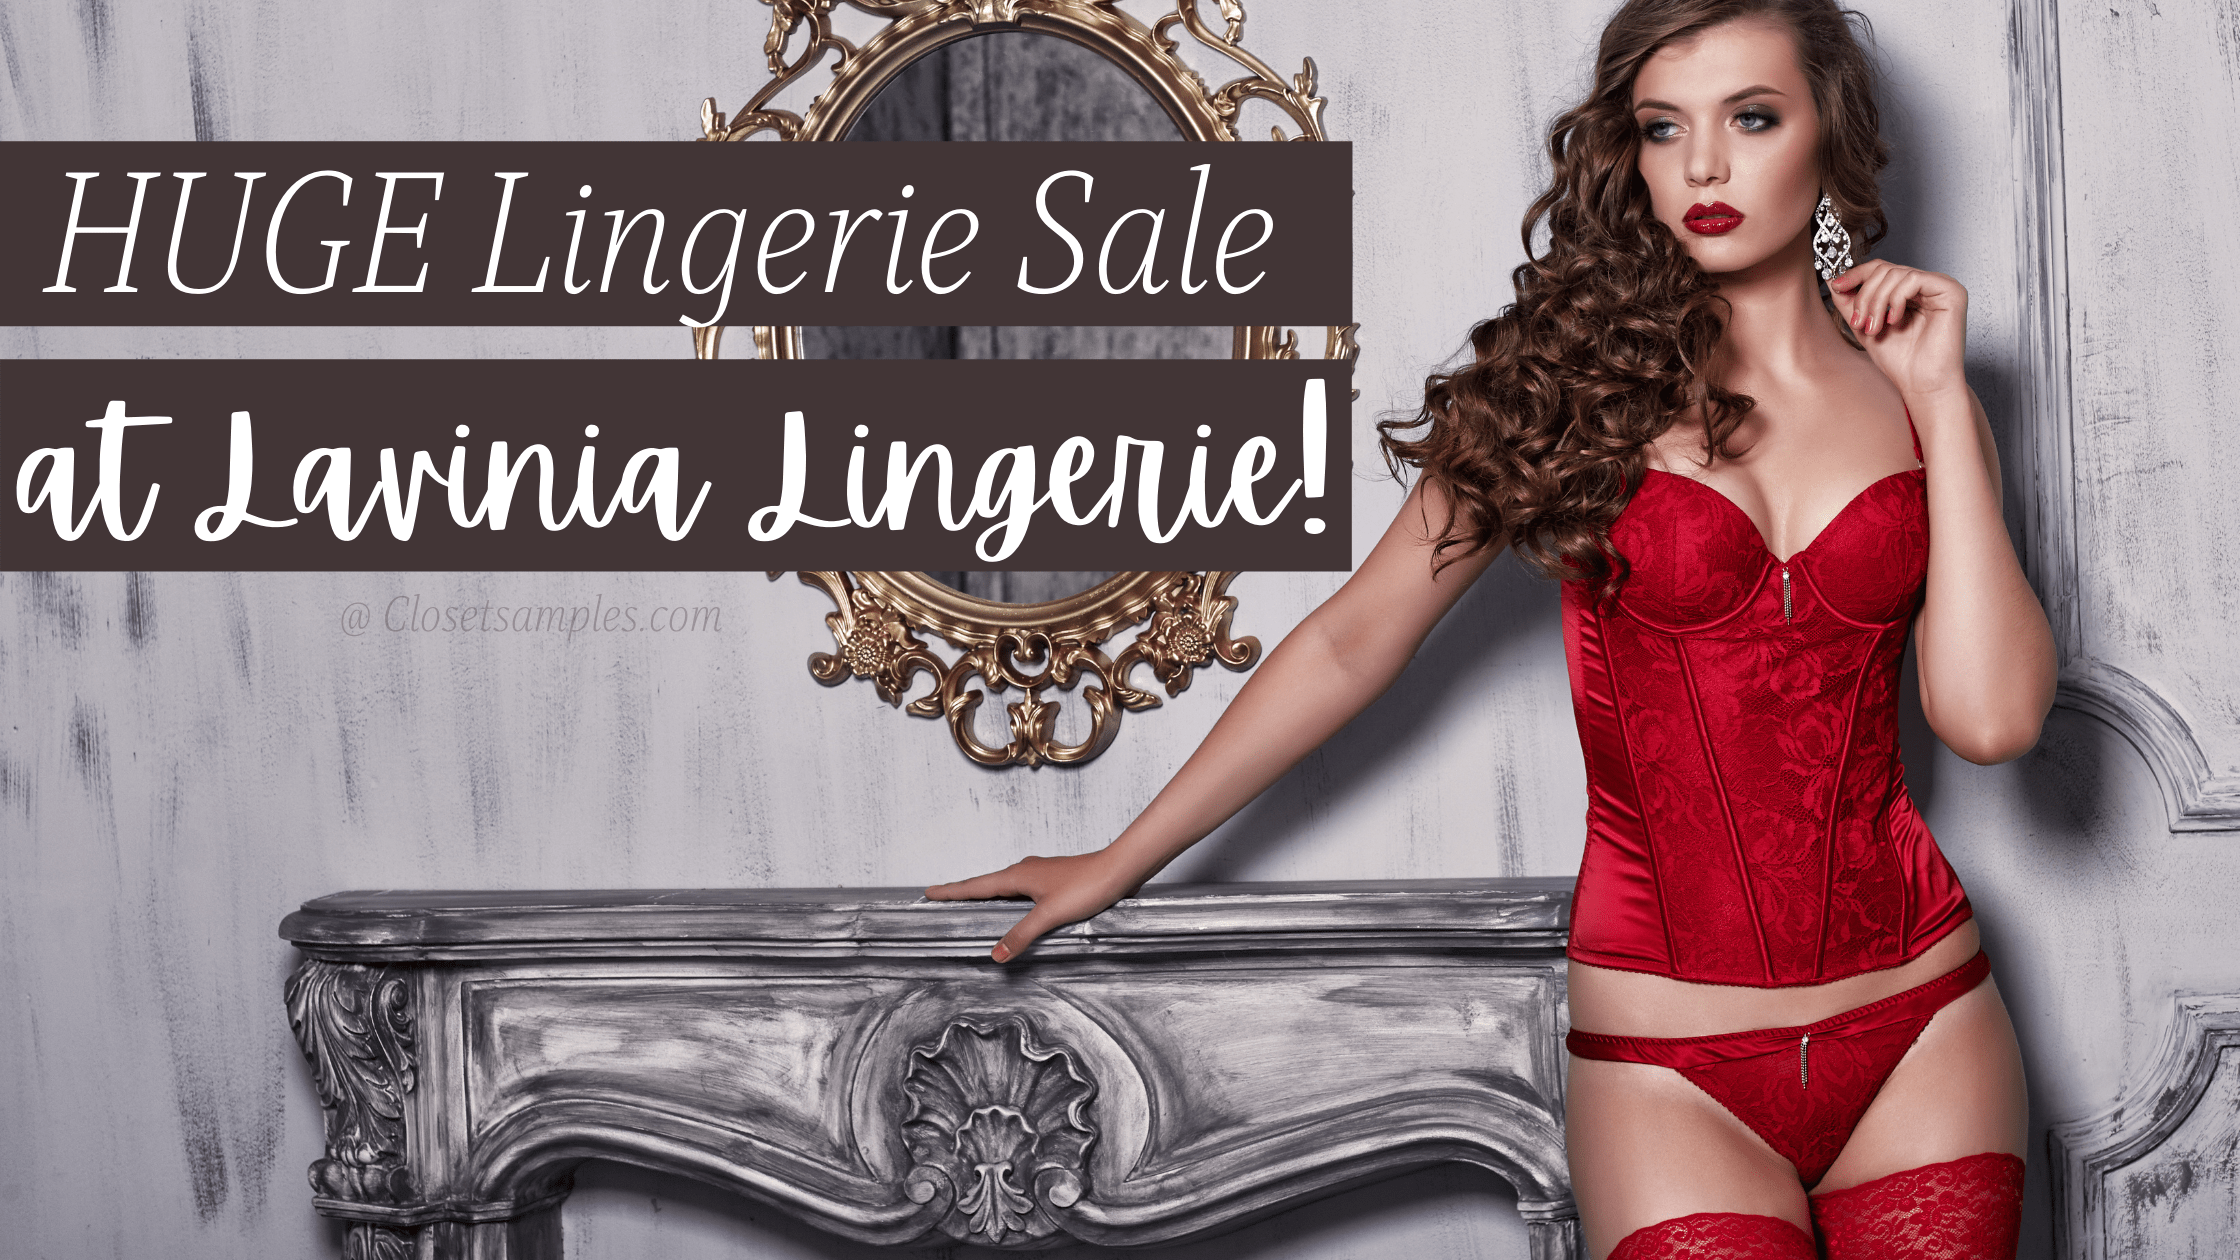 HUGE-Lingerie-Sale-at-Lavinia-Lingerie-closetsamples.png